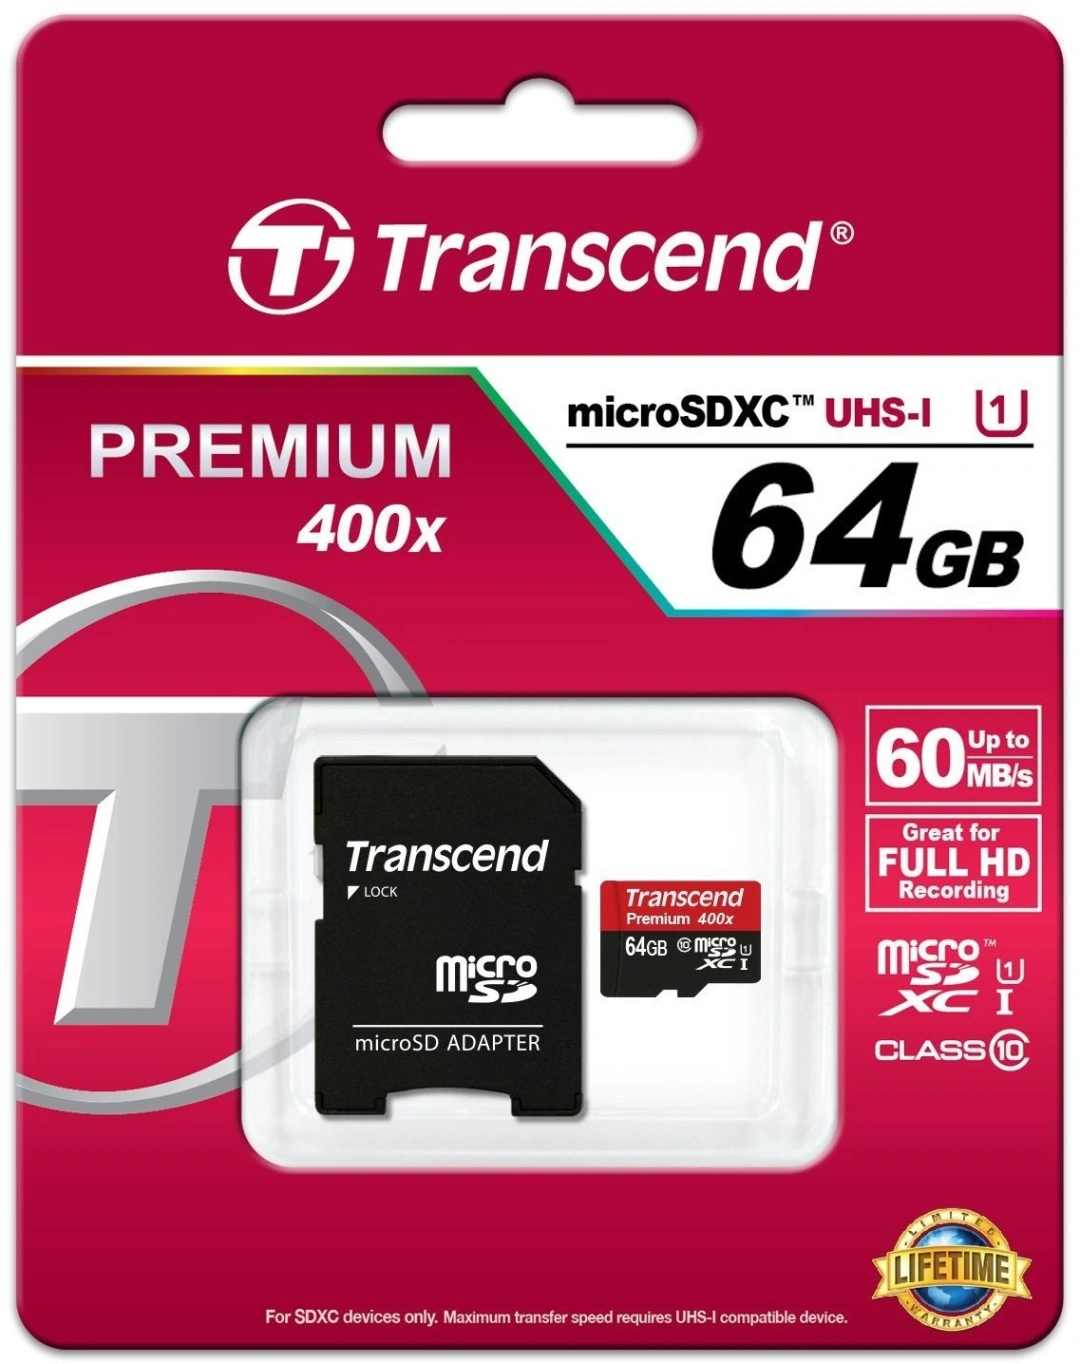 Transcend Micro SDXC Premium 400x 64GB 60MB/s UHS-I